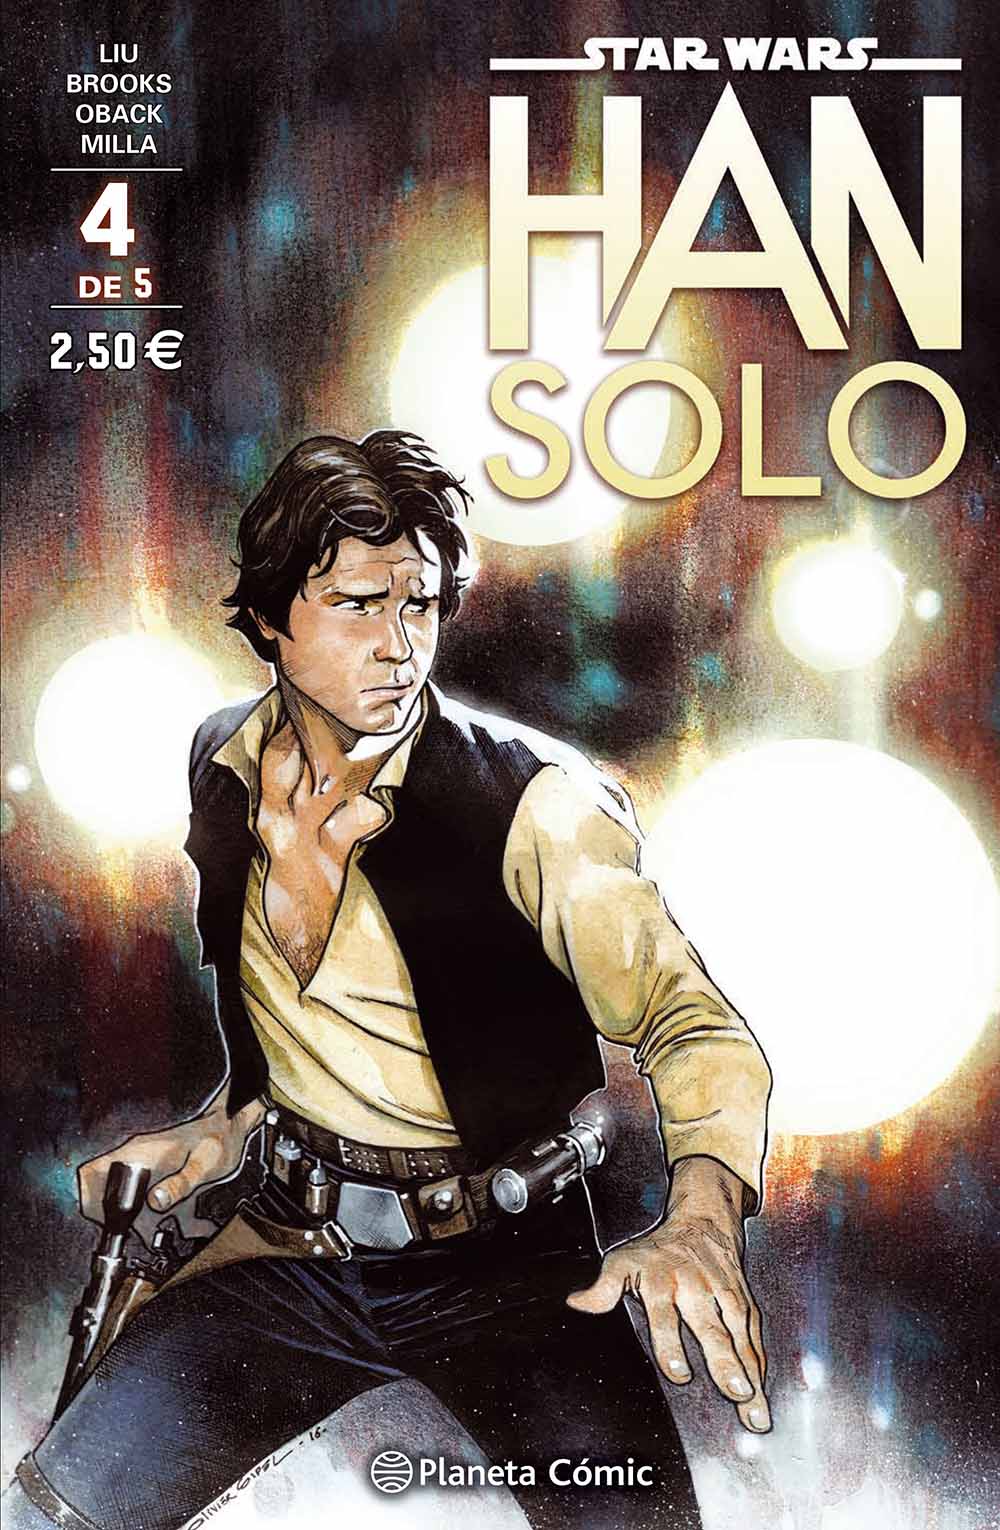 Reseña: ‘Star Wars: Han Solo’ nº 4